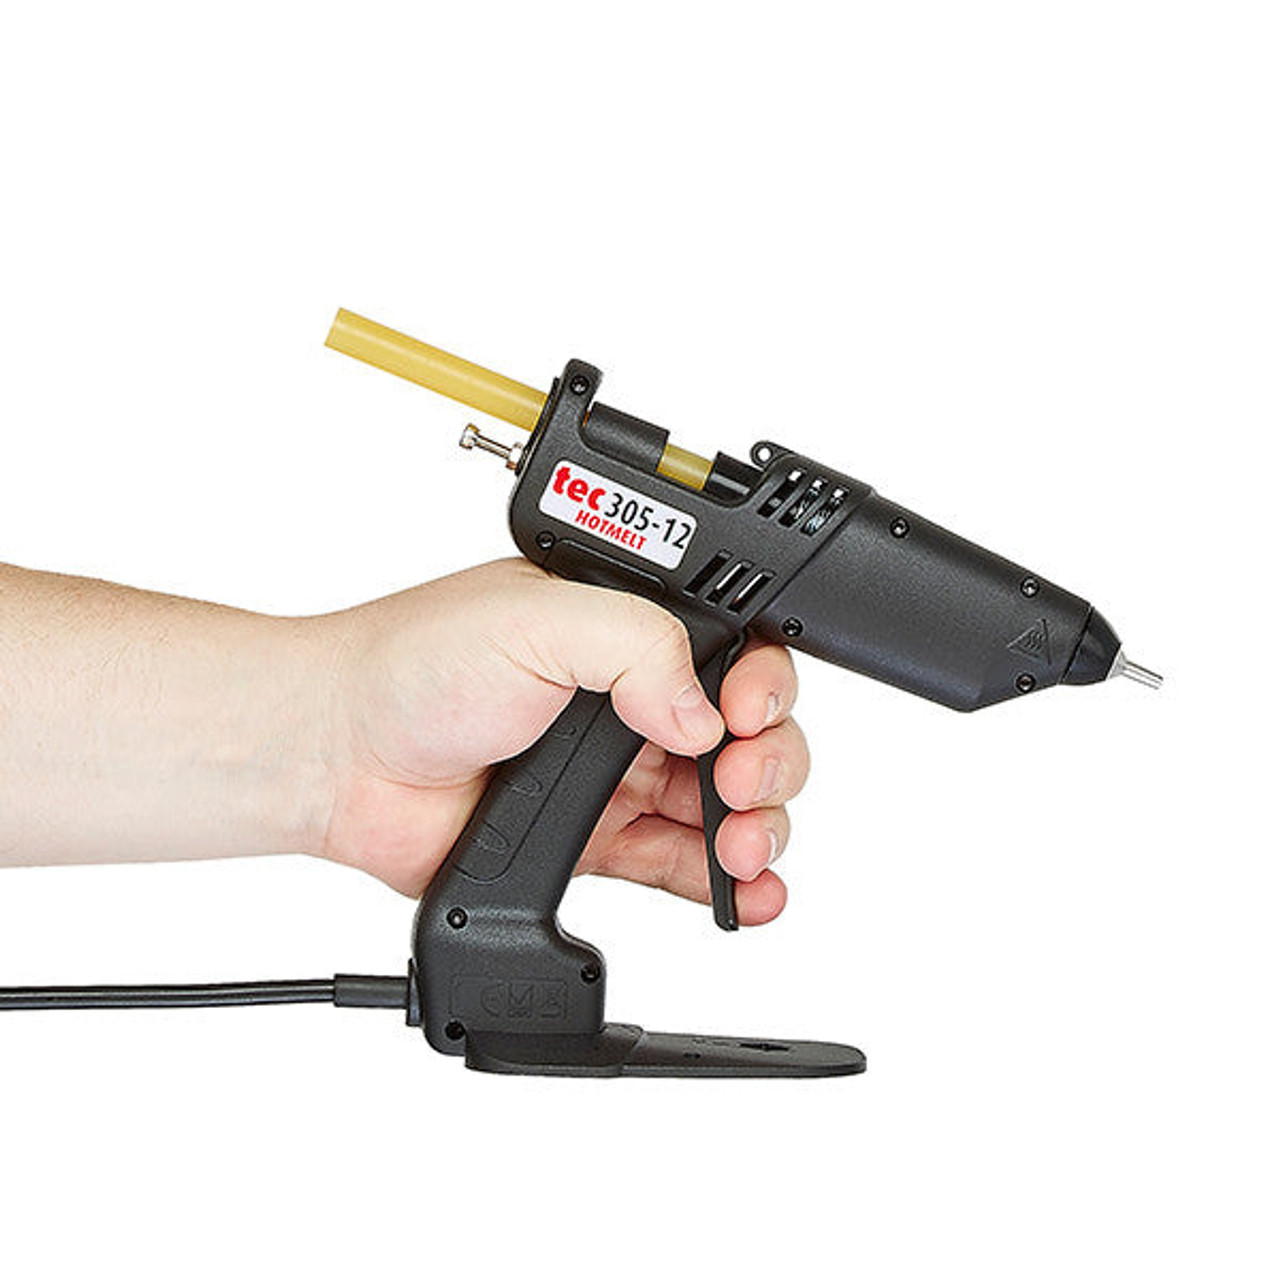 KNOTTEC Glue Gun | 305-12 Corded Hot Melt Industrial Glue Gun for Wood Repair